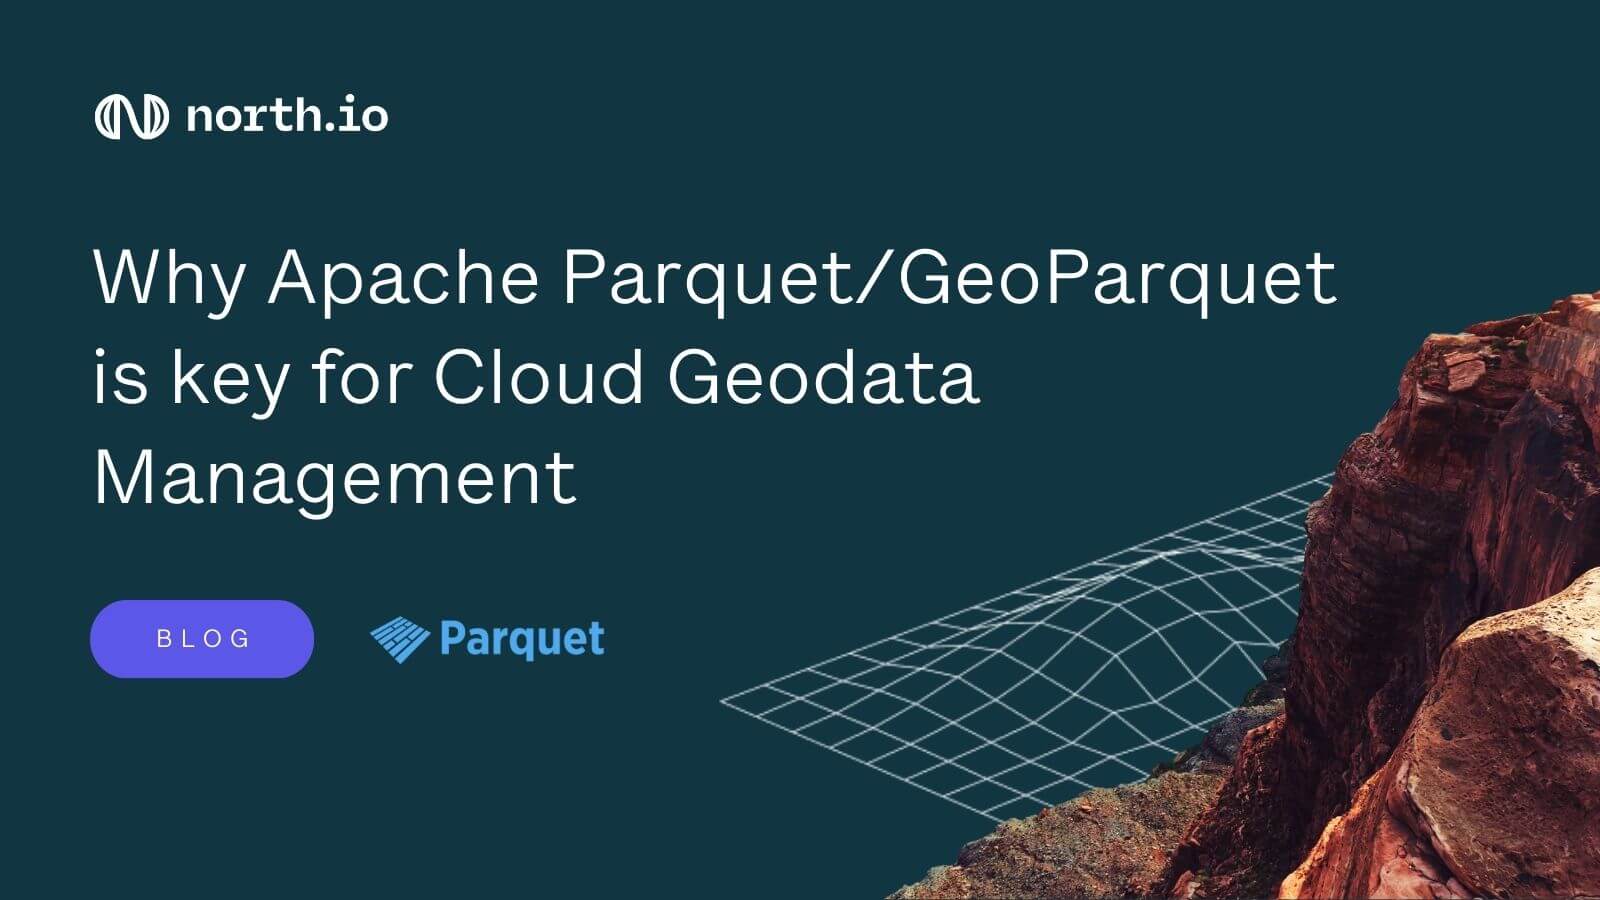 Why Apache Parquet/GeoParquet is key for Cloud Geodata Management